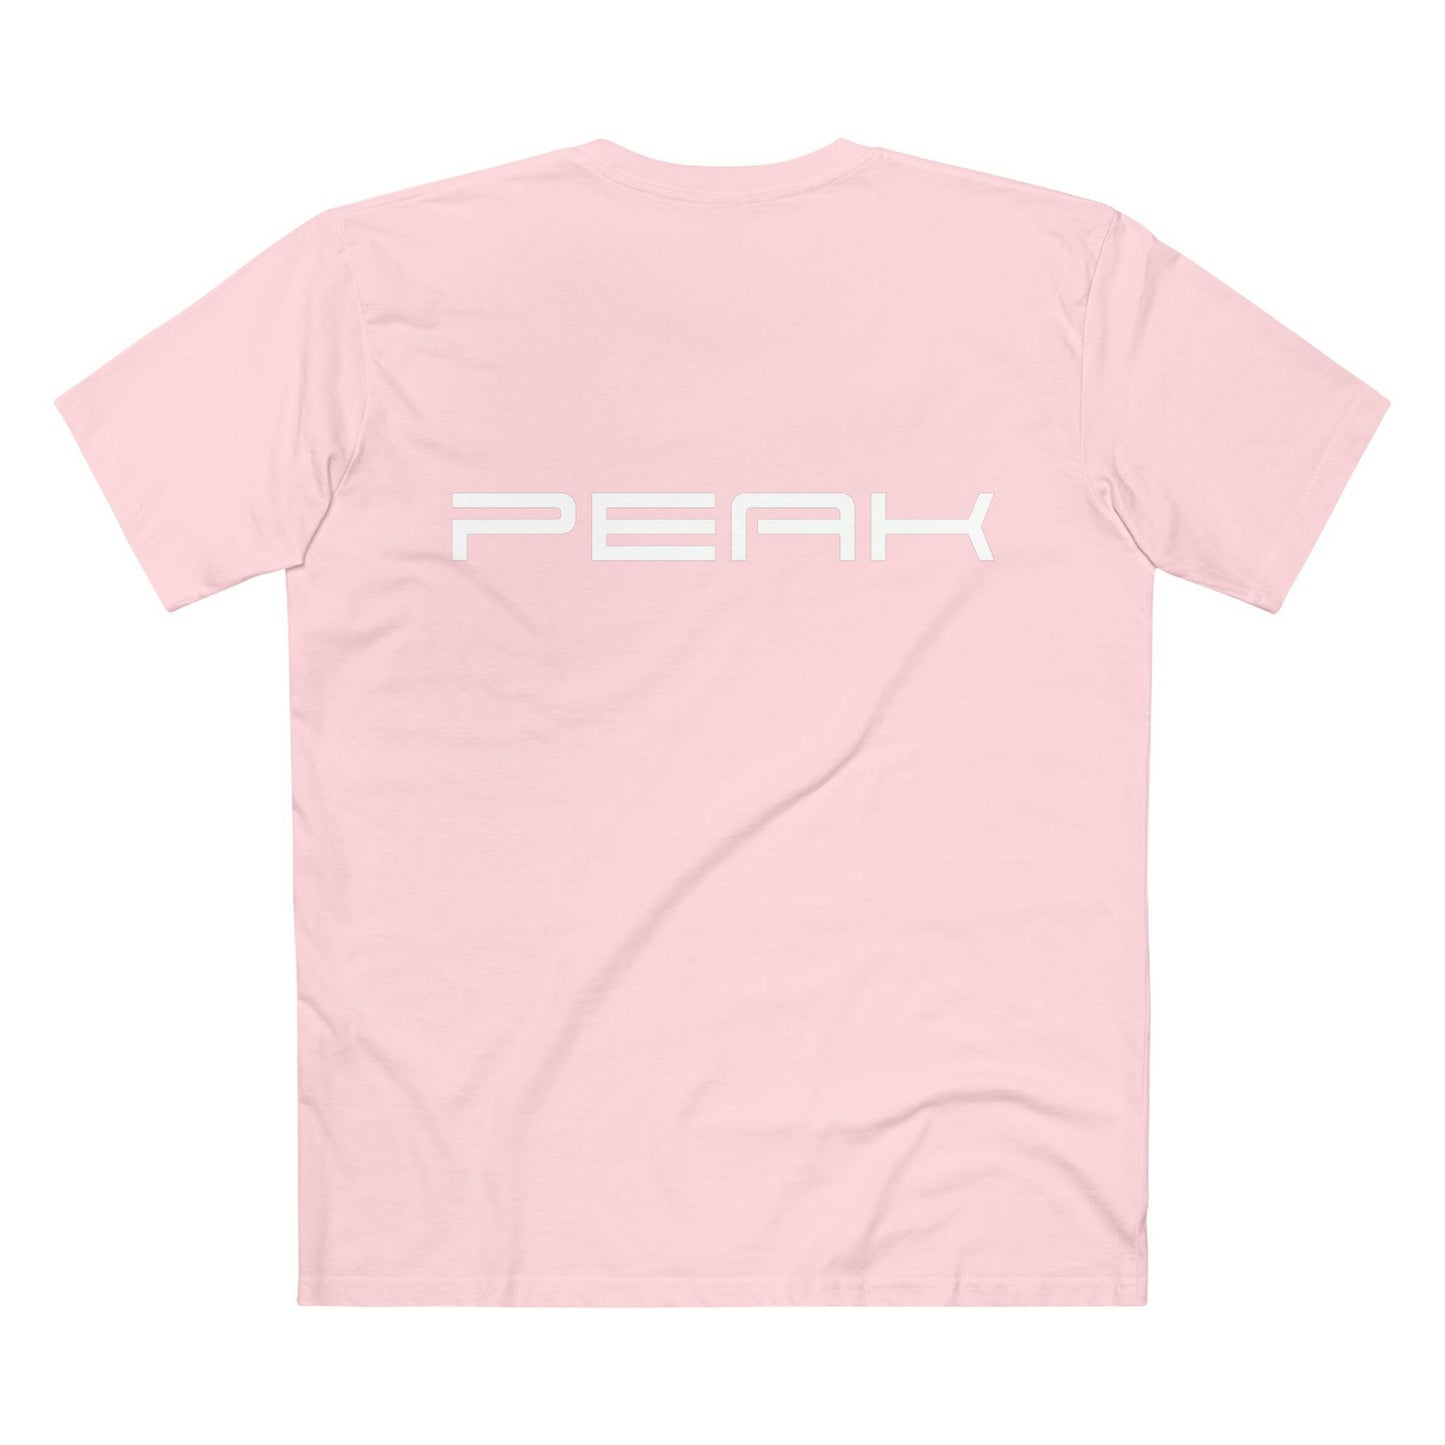 PEAK Men's Staple Tee 003 (Available in 7 Colors)